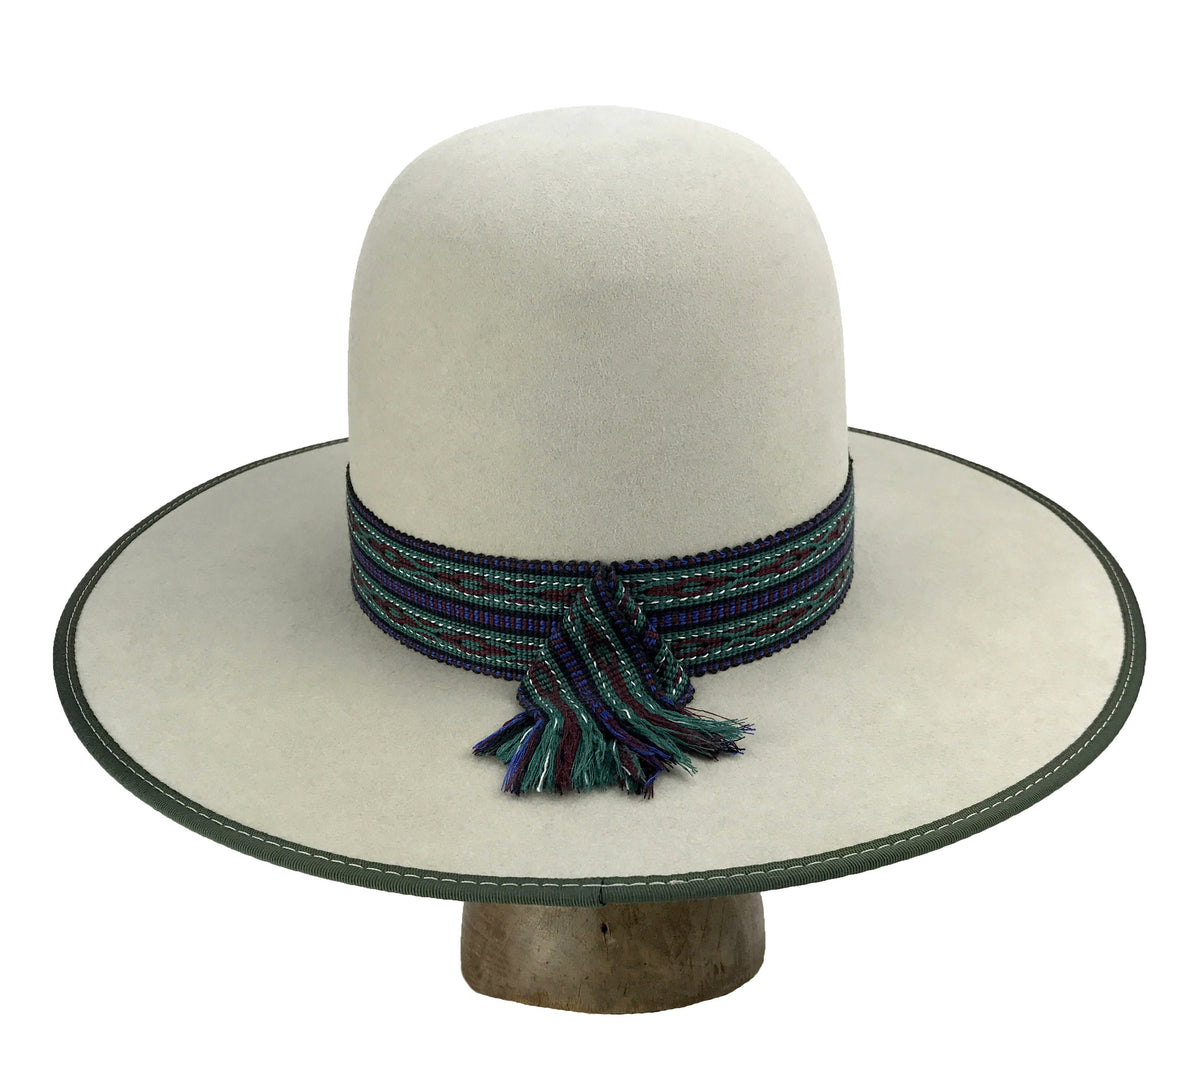 quality woven hatband